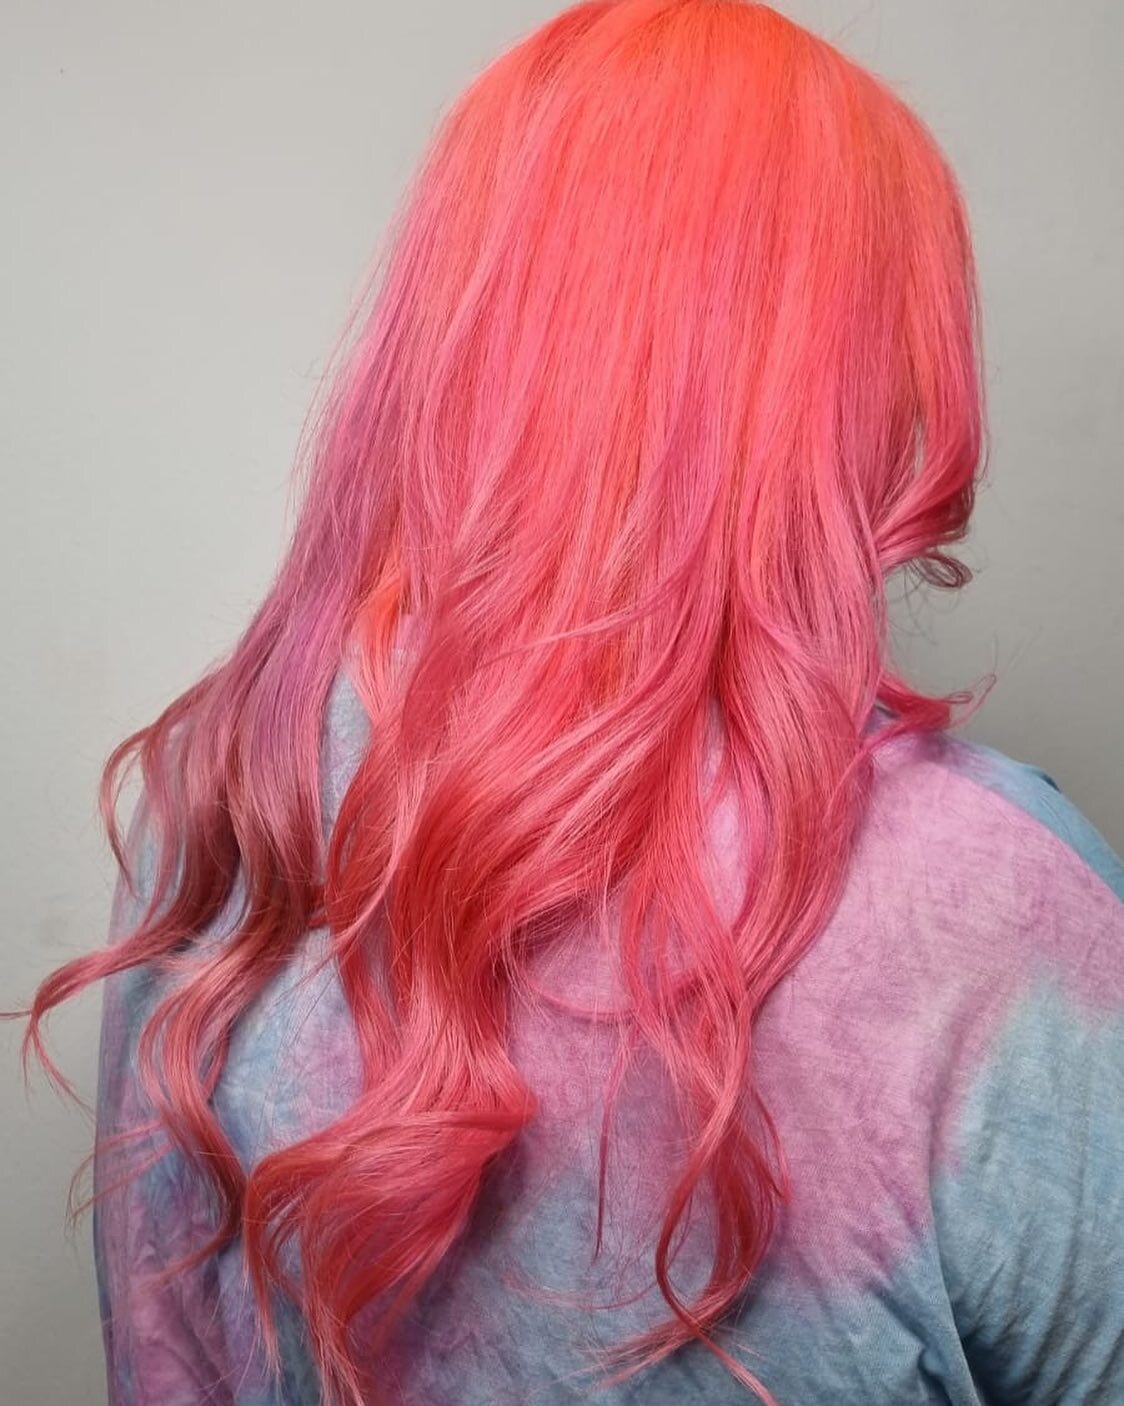 &mdash; Pink &mdash;
.
.
Done by Glen 

@twist_hair_salon_
.
.
.
.
.
.
.
.
#tanjongpagersalon #tanjongpagerhair #brazilanblowoutsg #twisthairsalon